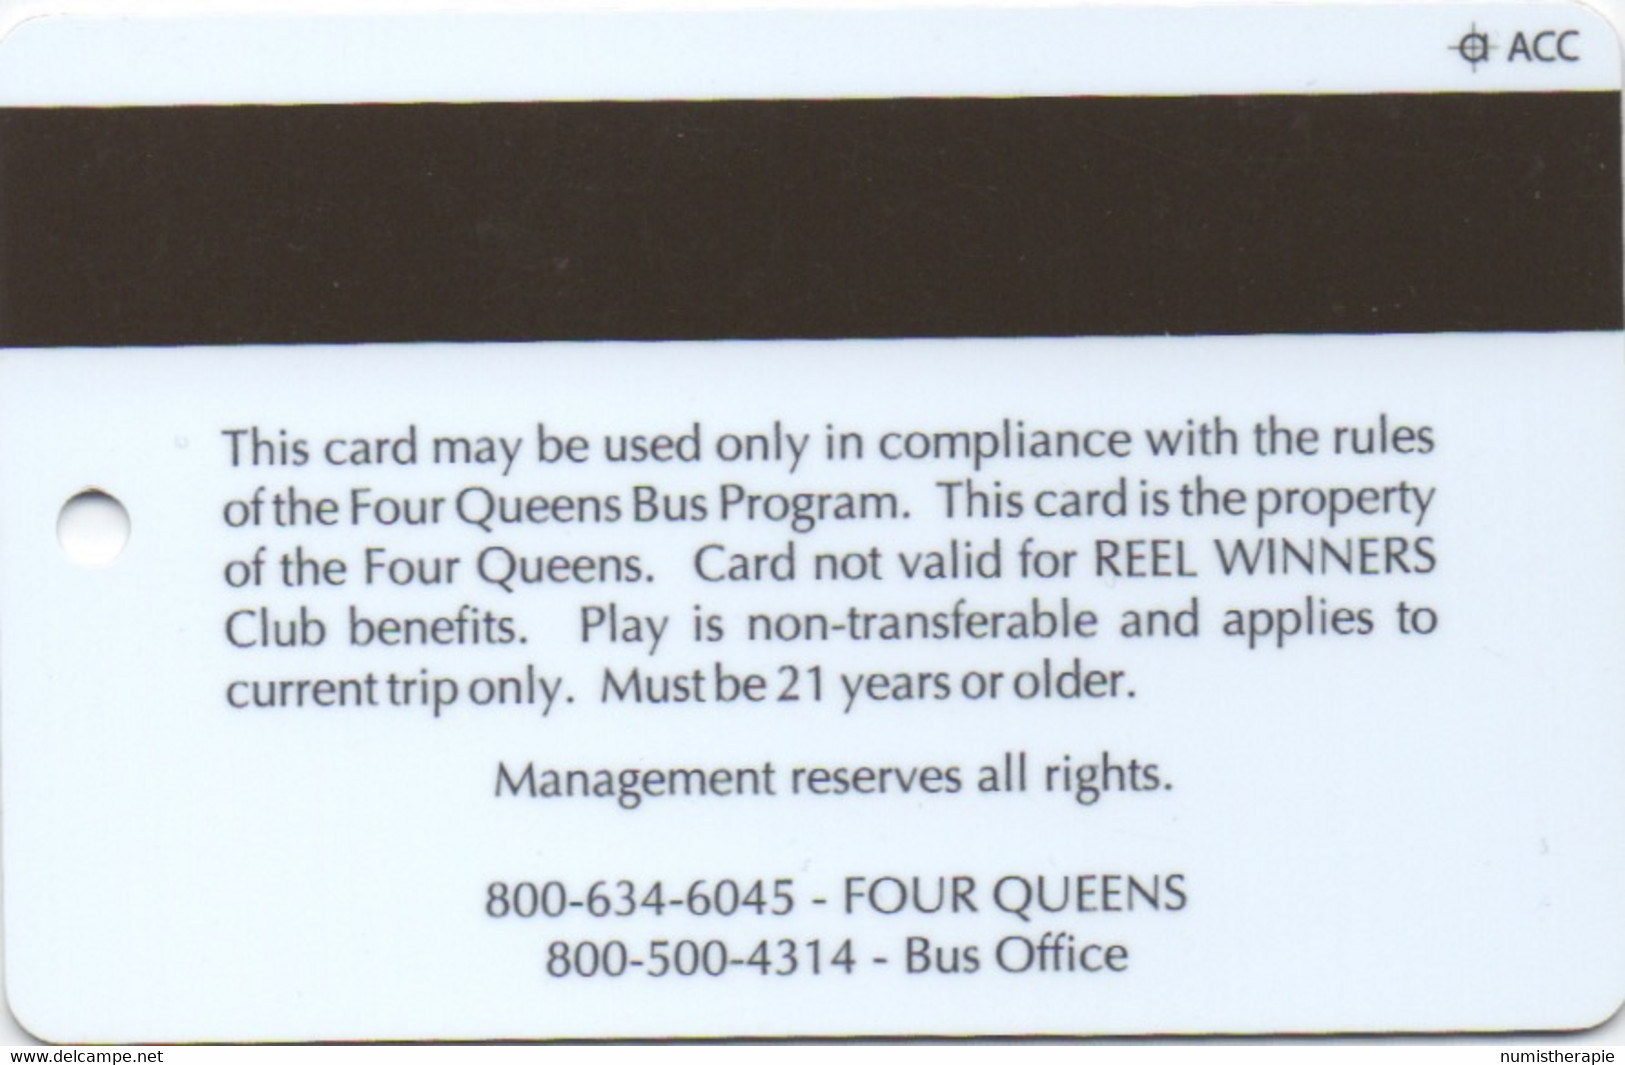 Four Queens Casino Hotel Las Vegas : Bus Program - Casino Cards